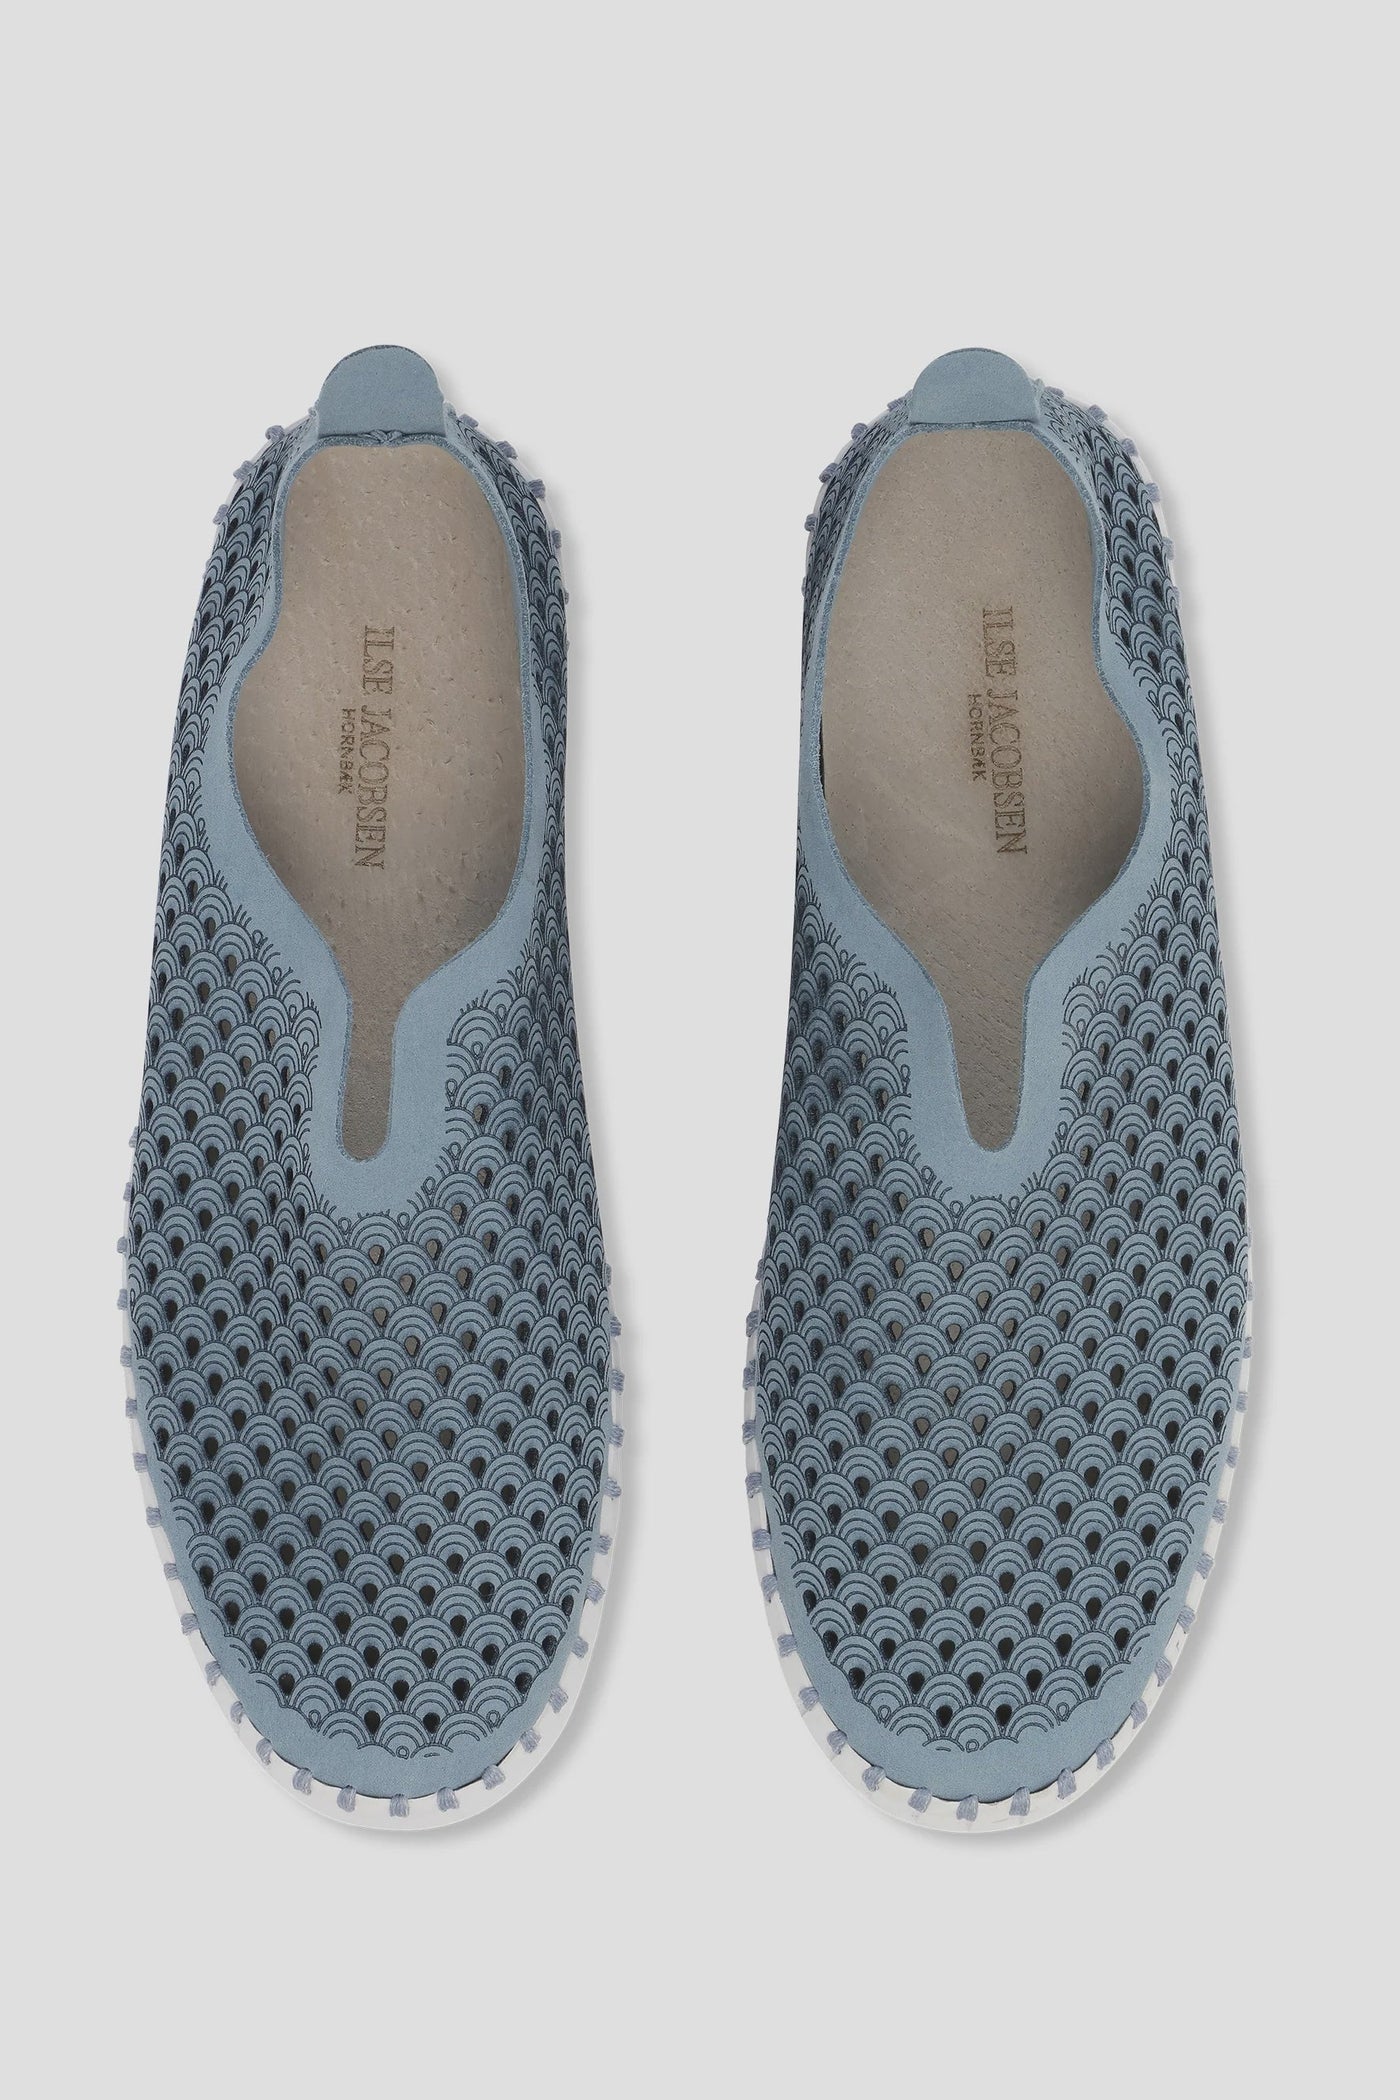 Ilse Jacobsen Platform Tulip Shoes in Blue Cloud-Womens-Ohh! By Gum - Shop Sustainable